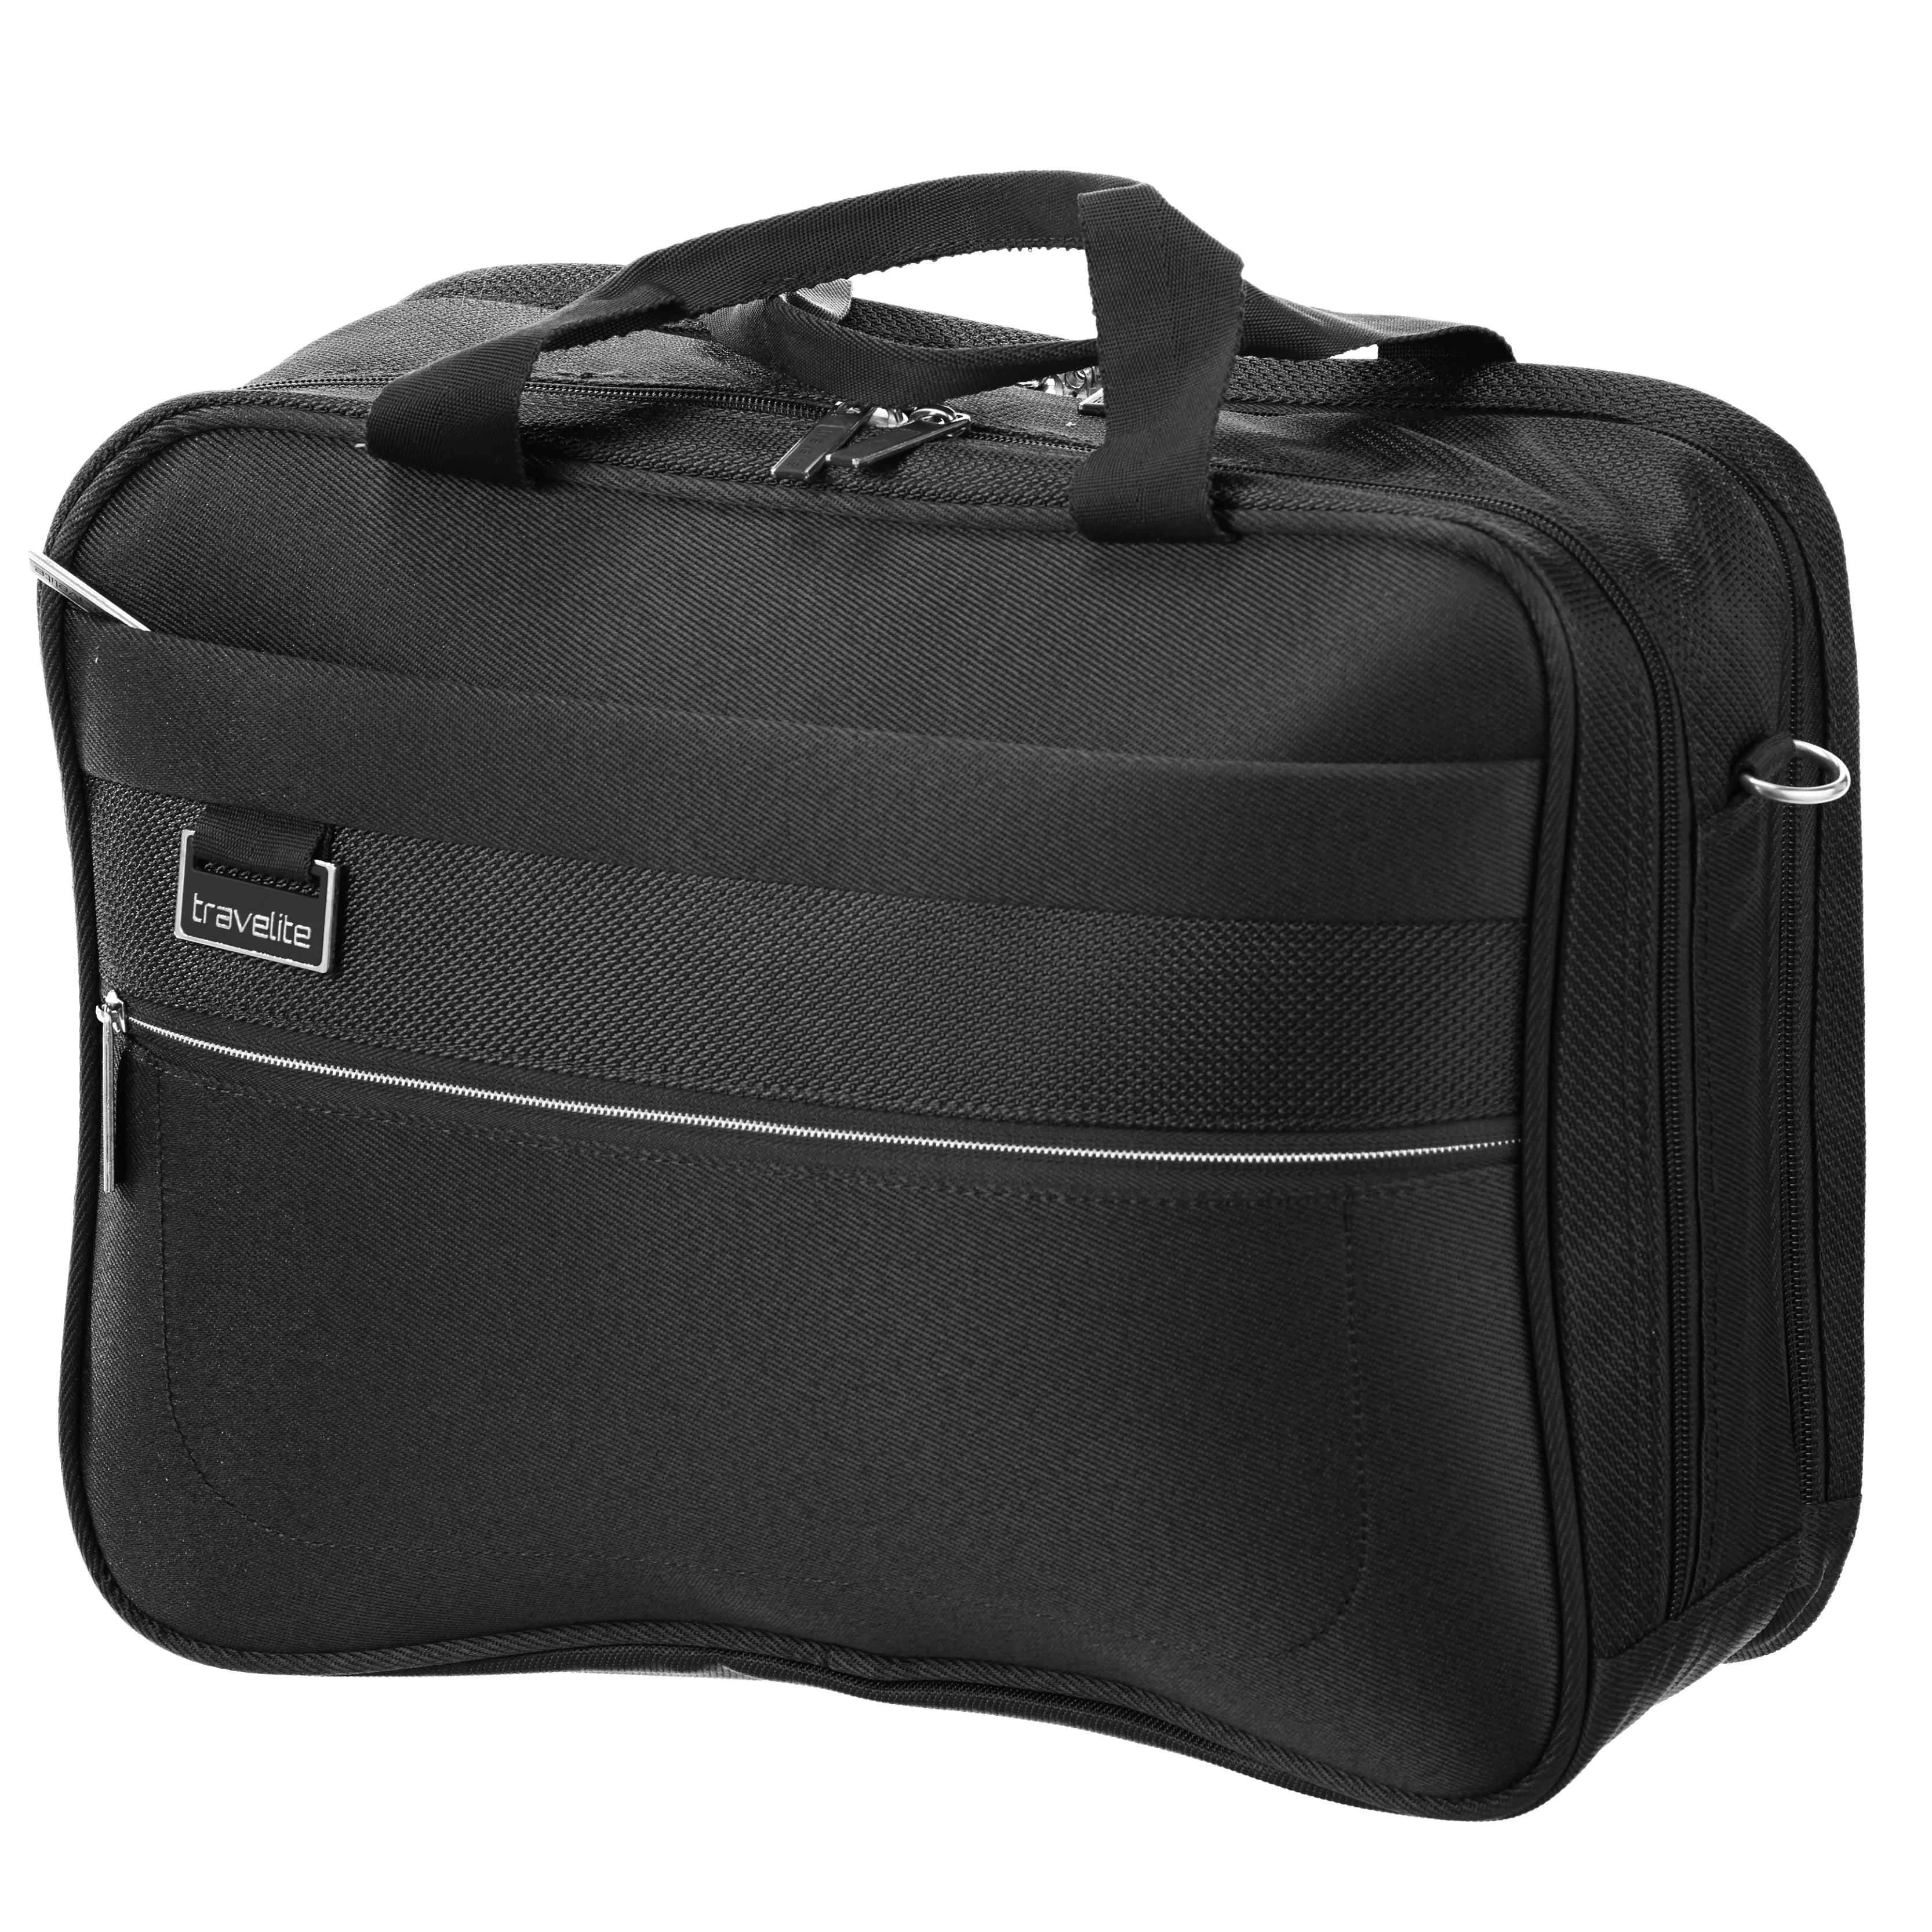 Travelite Miigo boarding bag 40 cm - night black